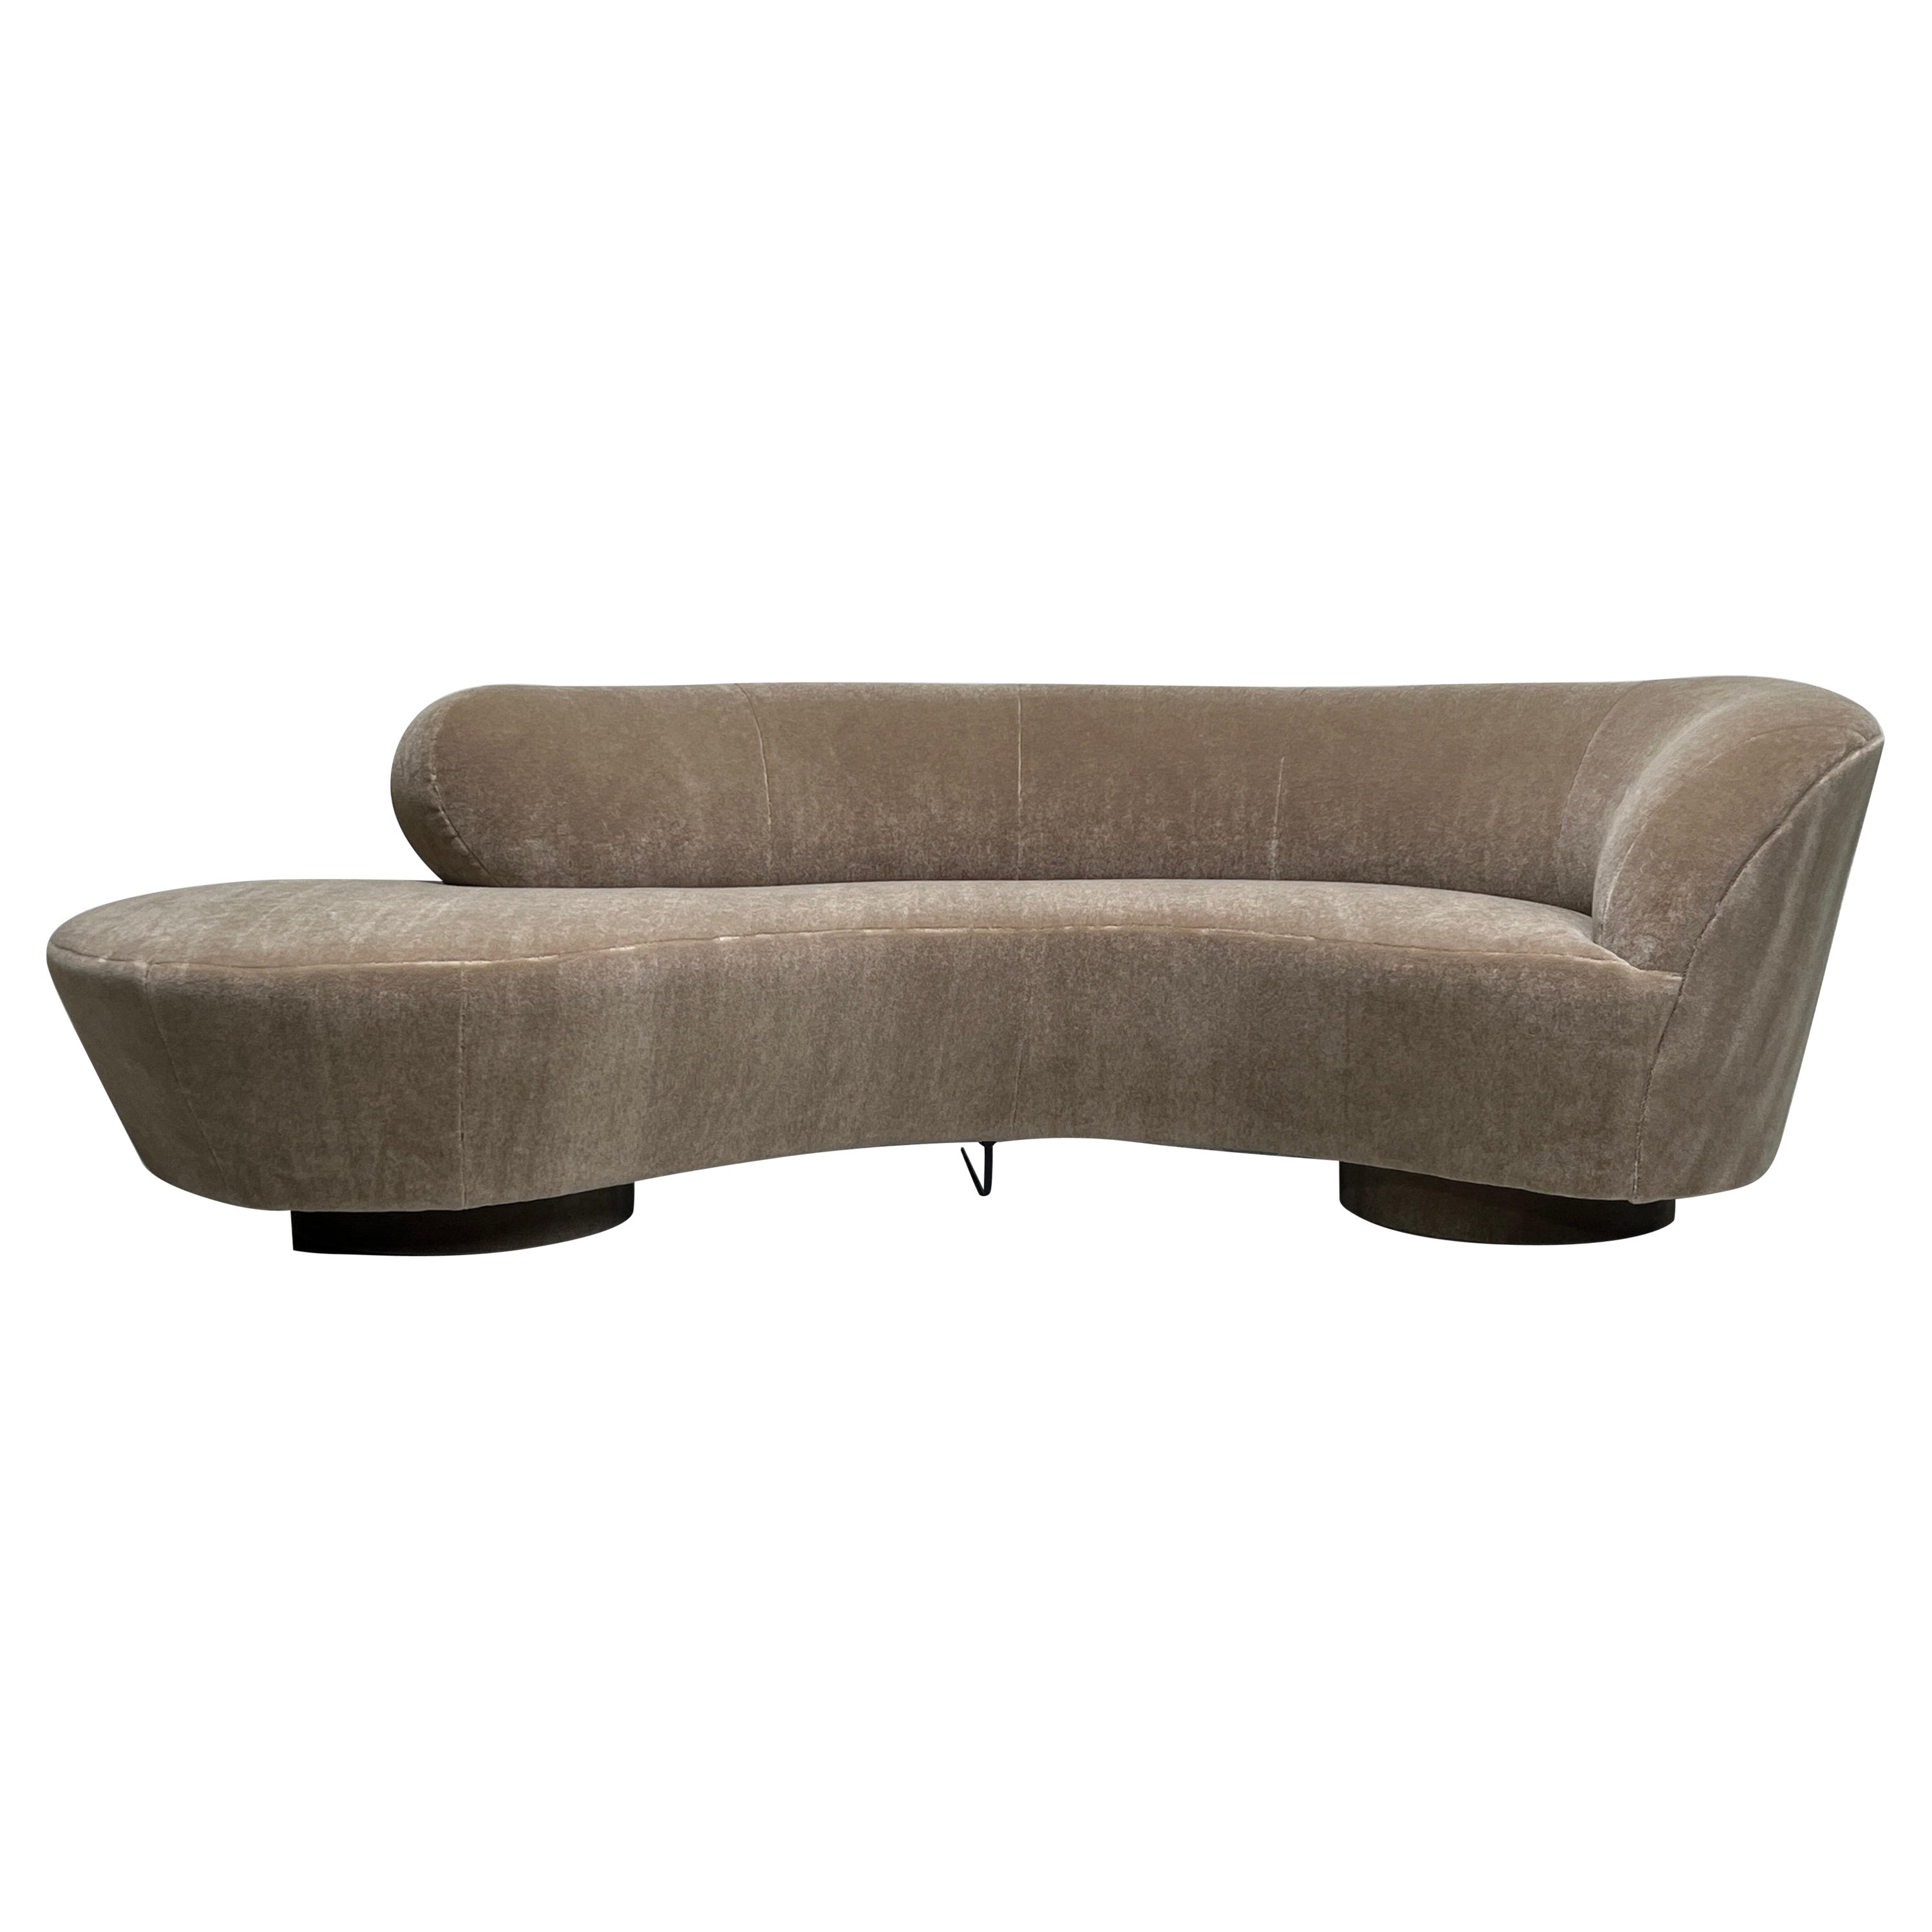 Sofa by Vladimir Kagan for Directional